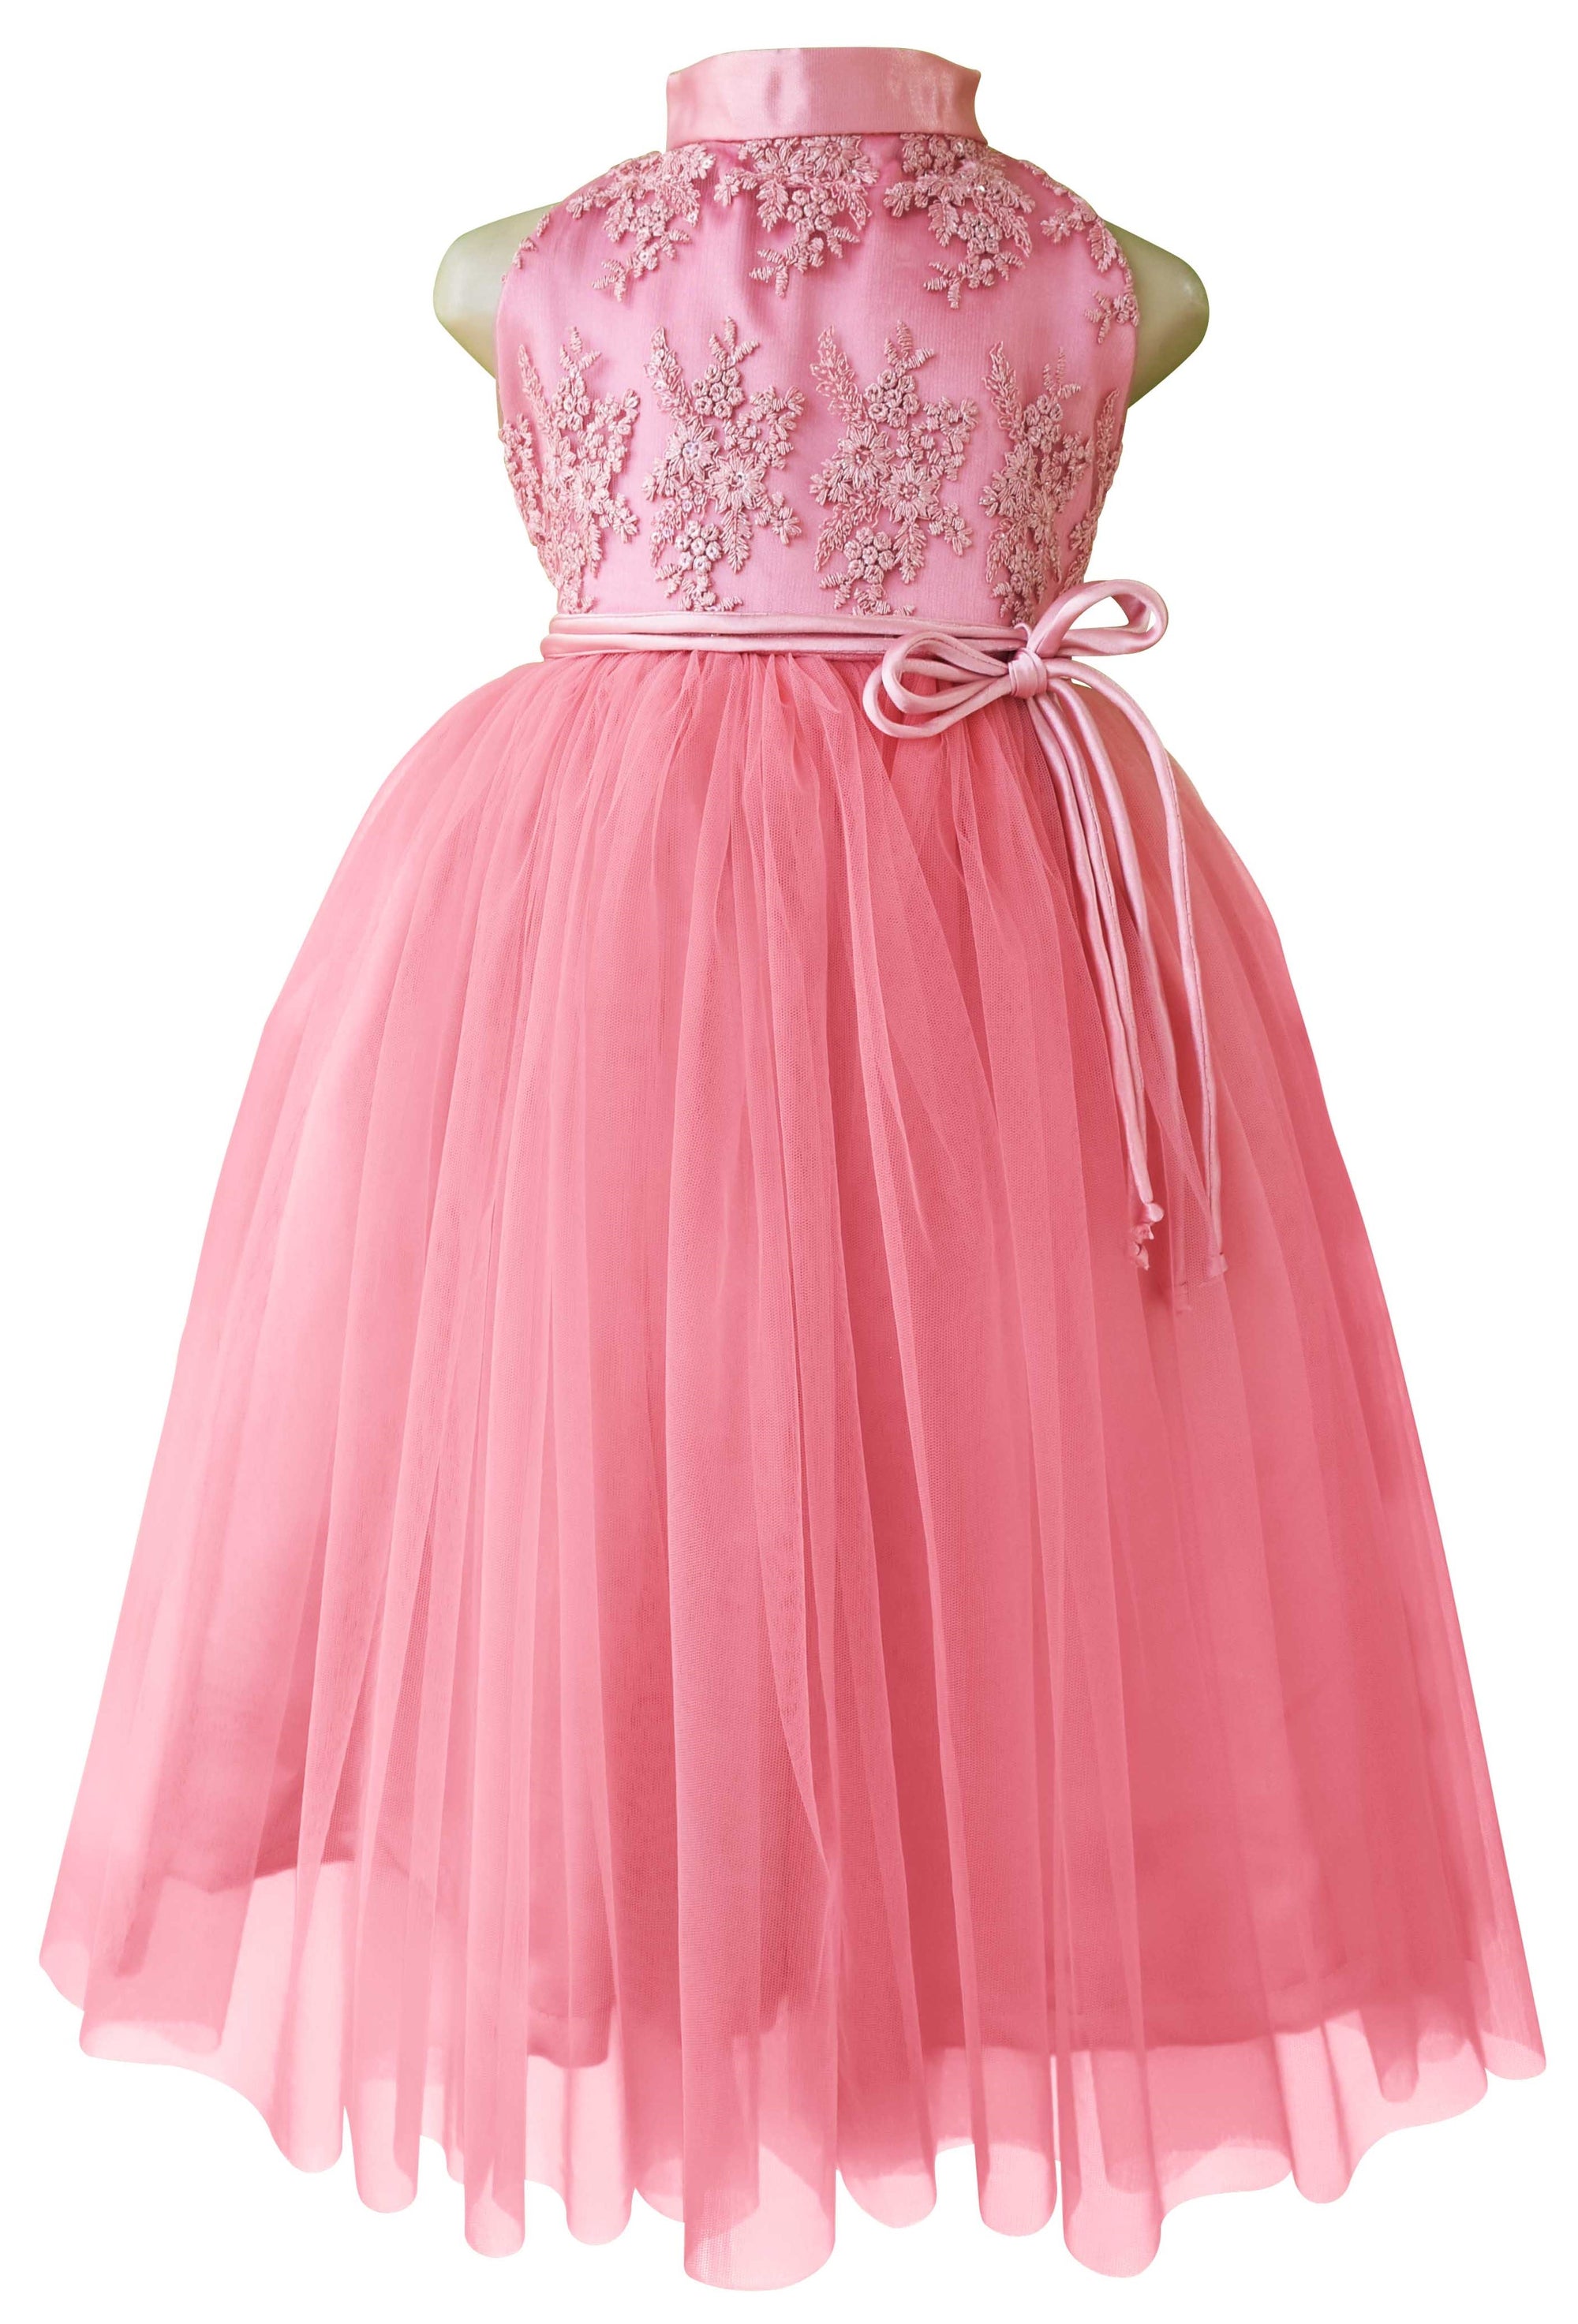 Buy Aarika Girl's net a-line Maxi Dress (G-24424_Green_9-10 Years) at  Amazon.in